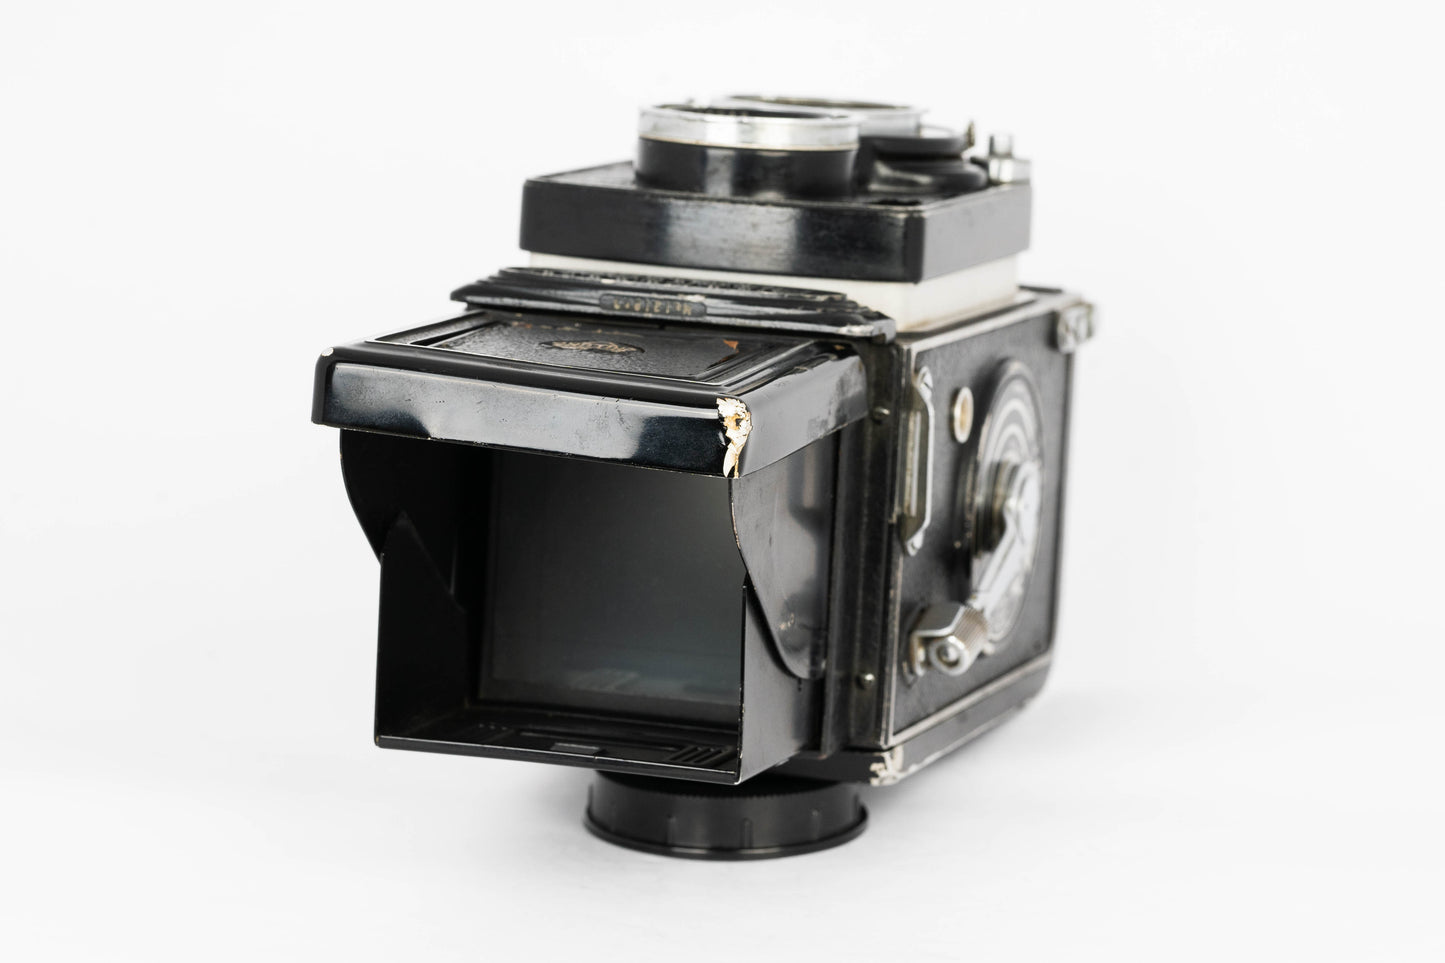 Minoltacord Automat TLR Film Camera Chiyoko 75mm F3.5